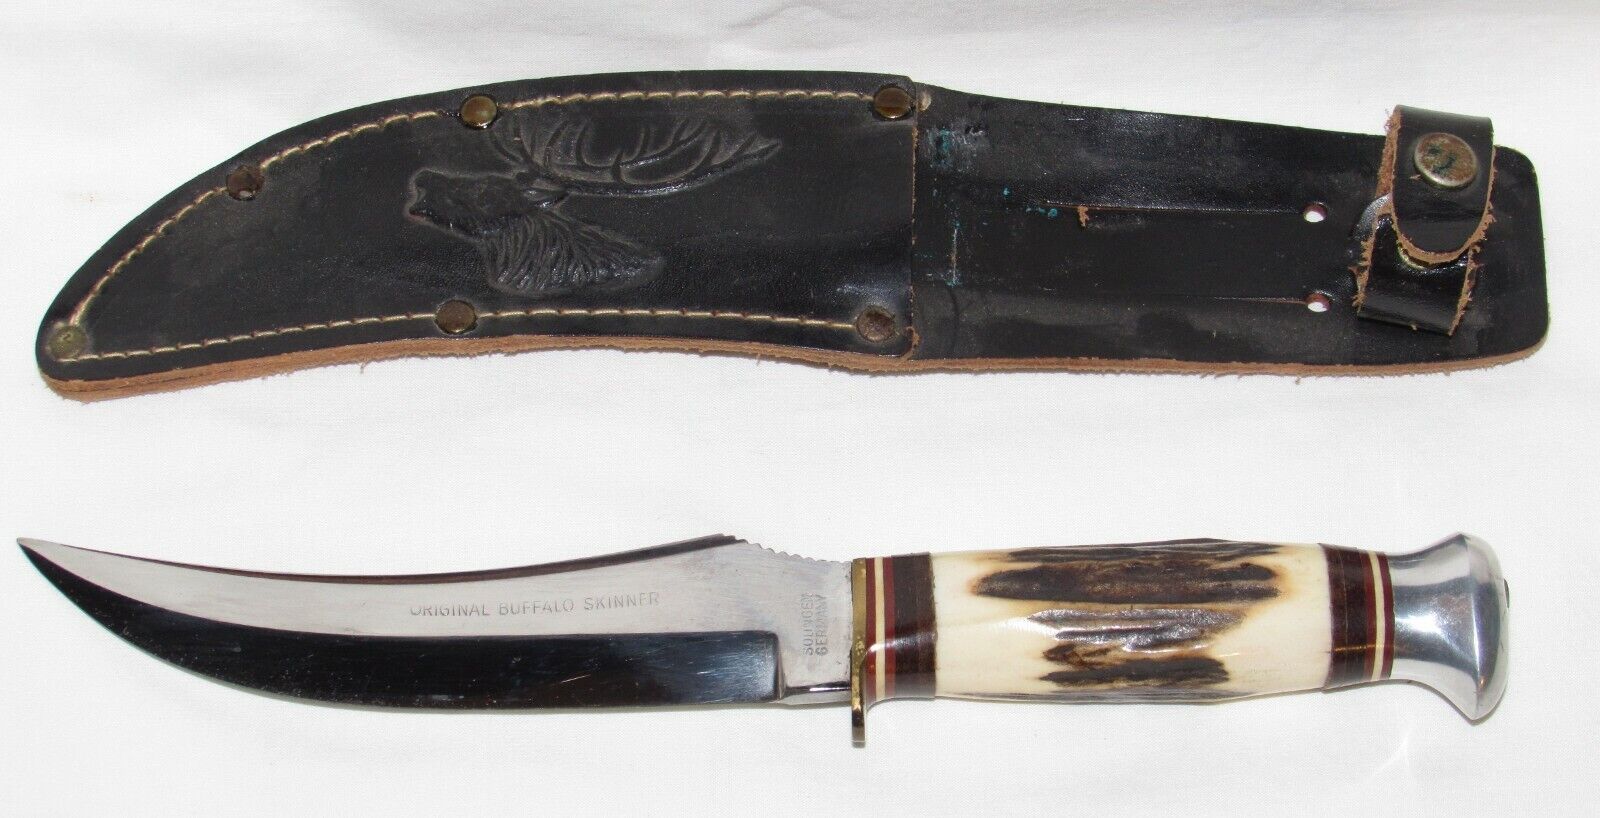 Vintage Solingen Germany Original Buffalo Skinner Hunting Knife with Sheath